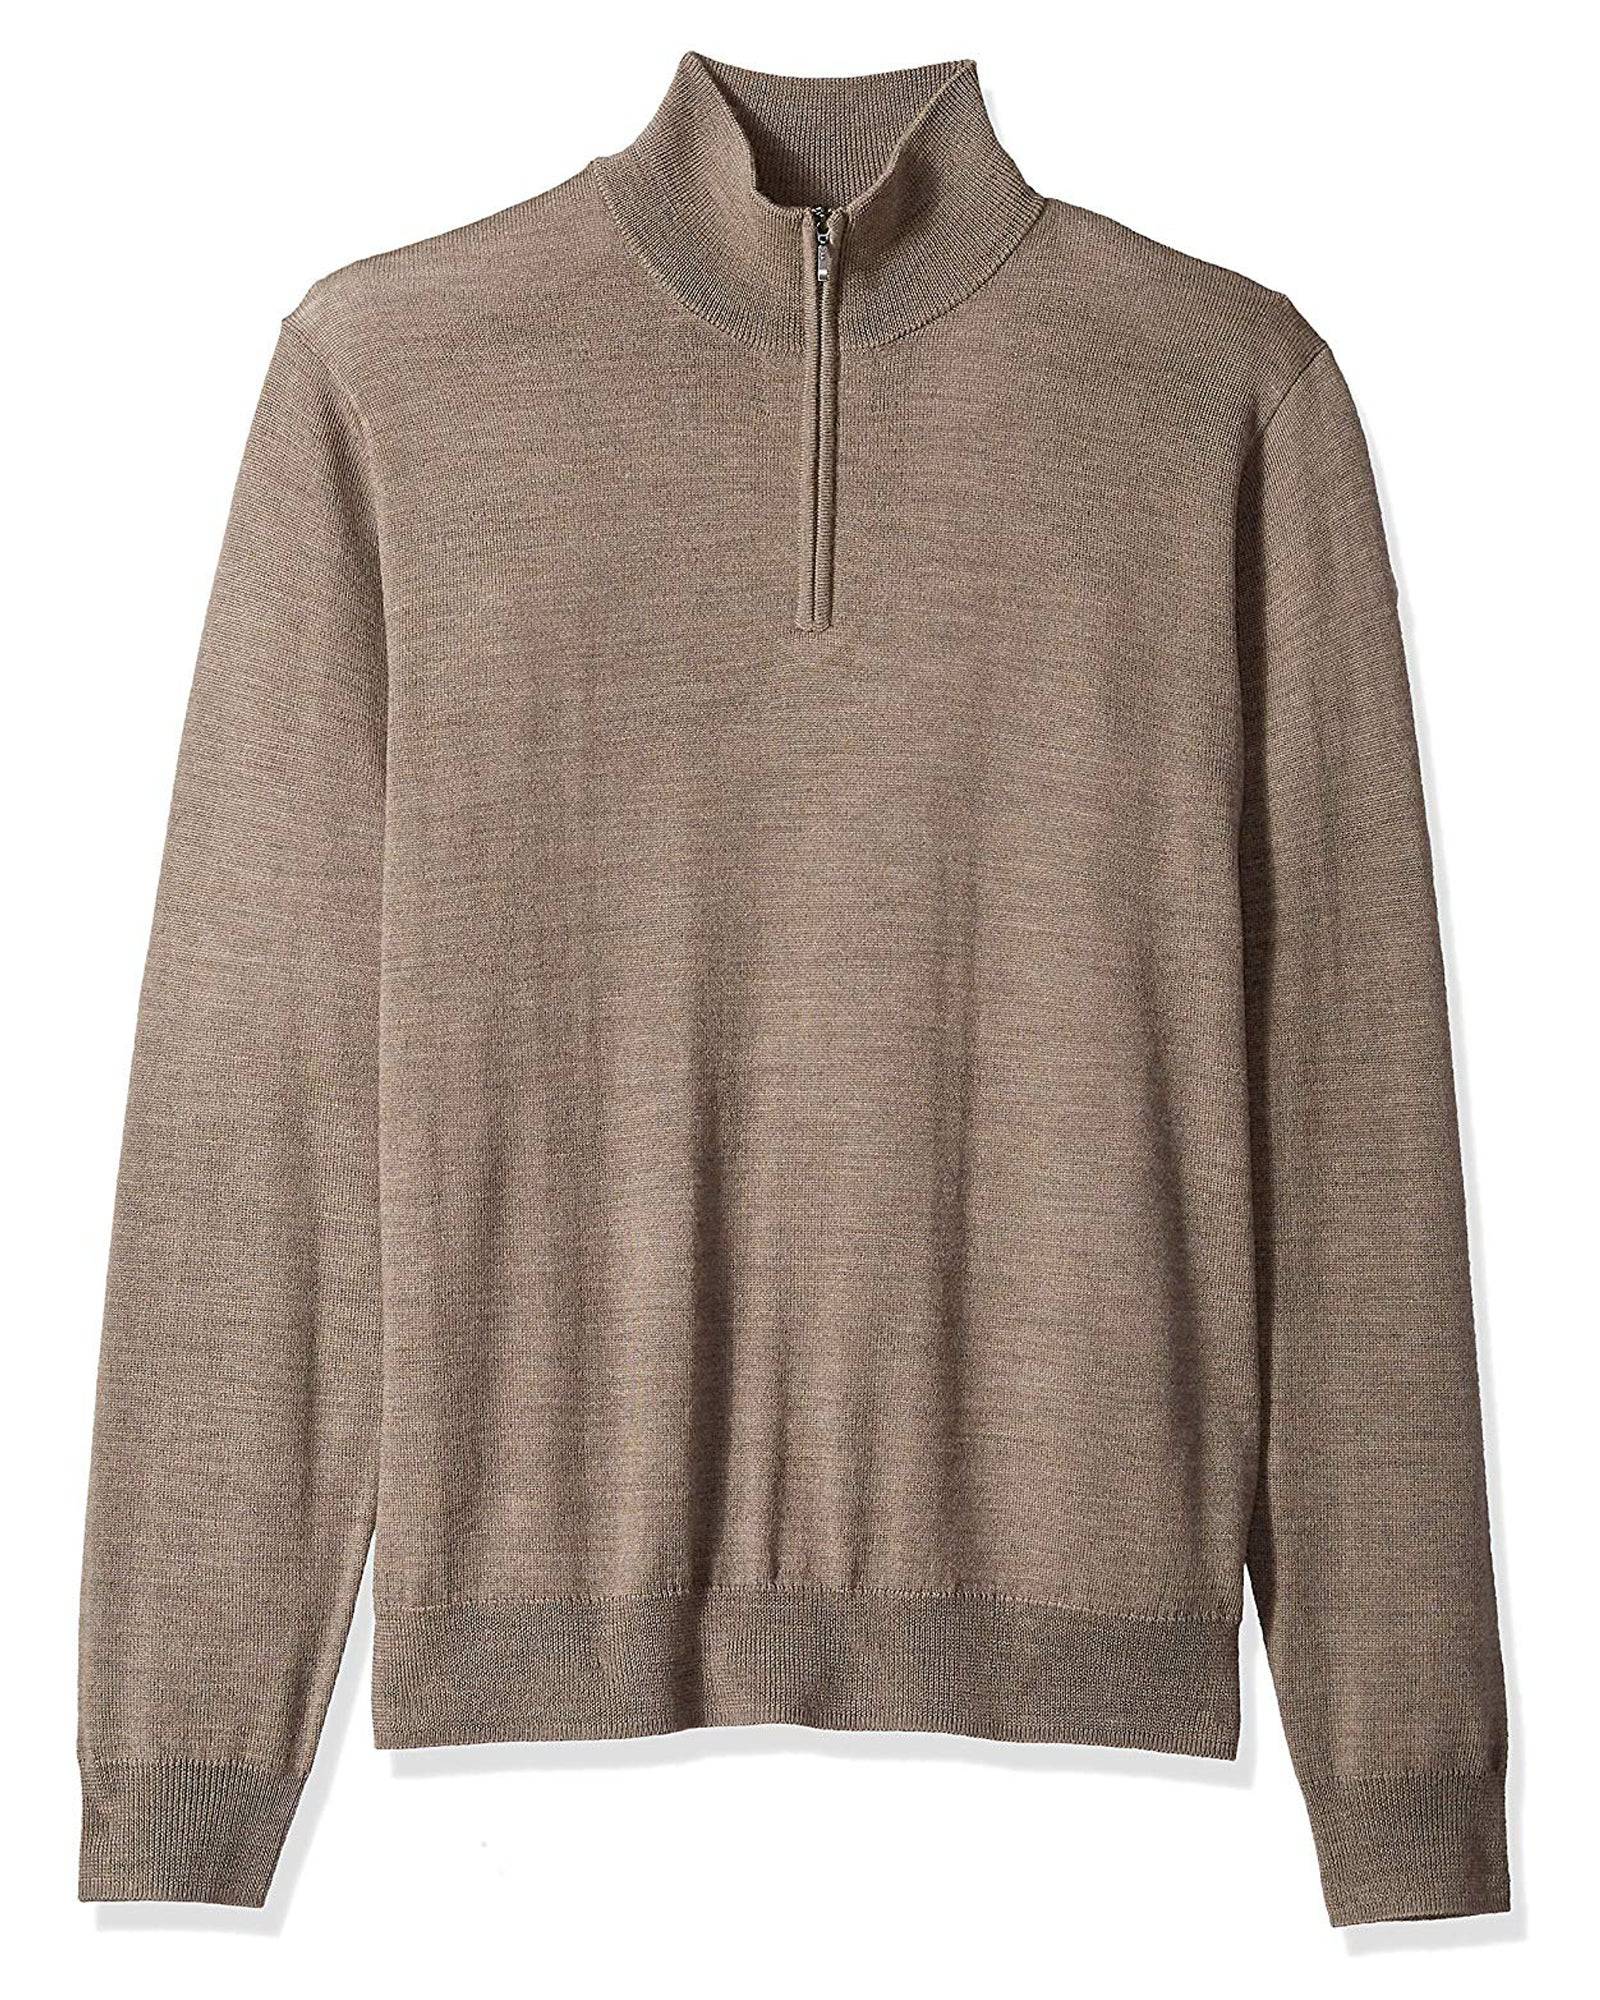 1/4 Zip Mock Sweater in Light Brown 100% Merino Wool - Rainwater's Men's Clothing and Tuxedo Rental